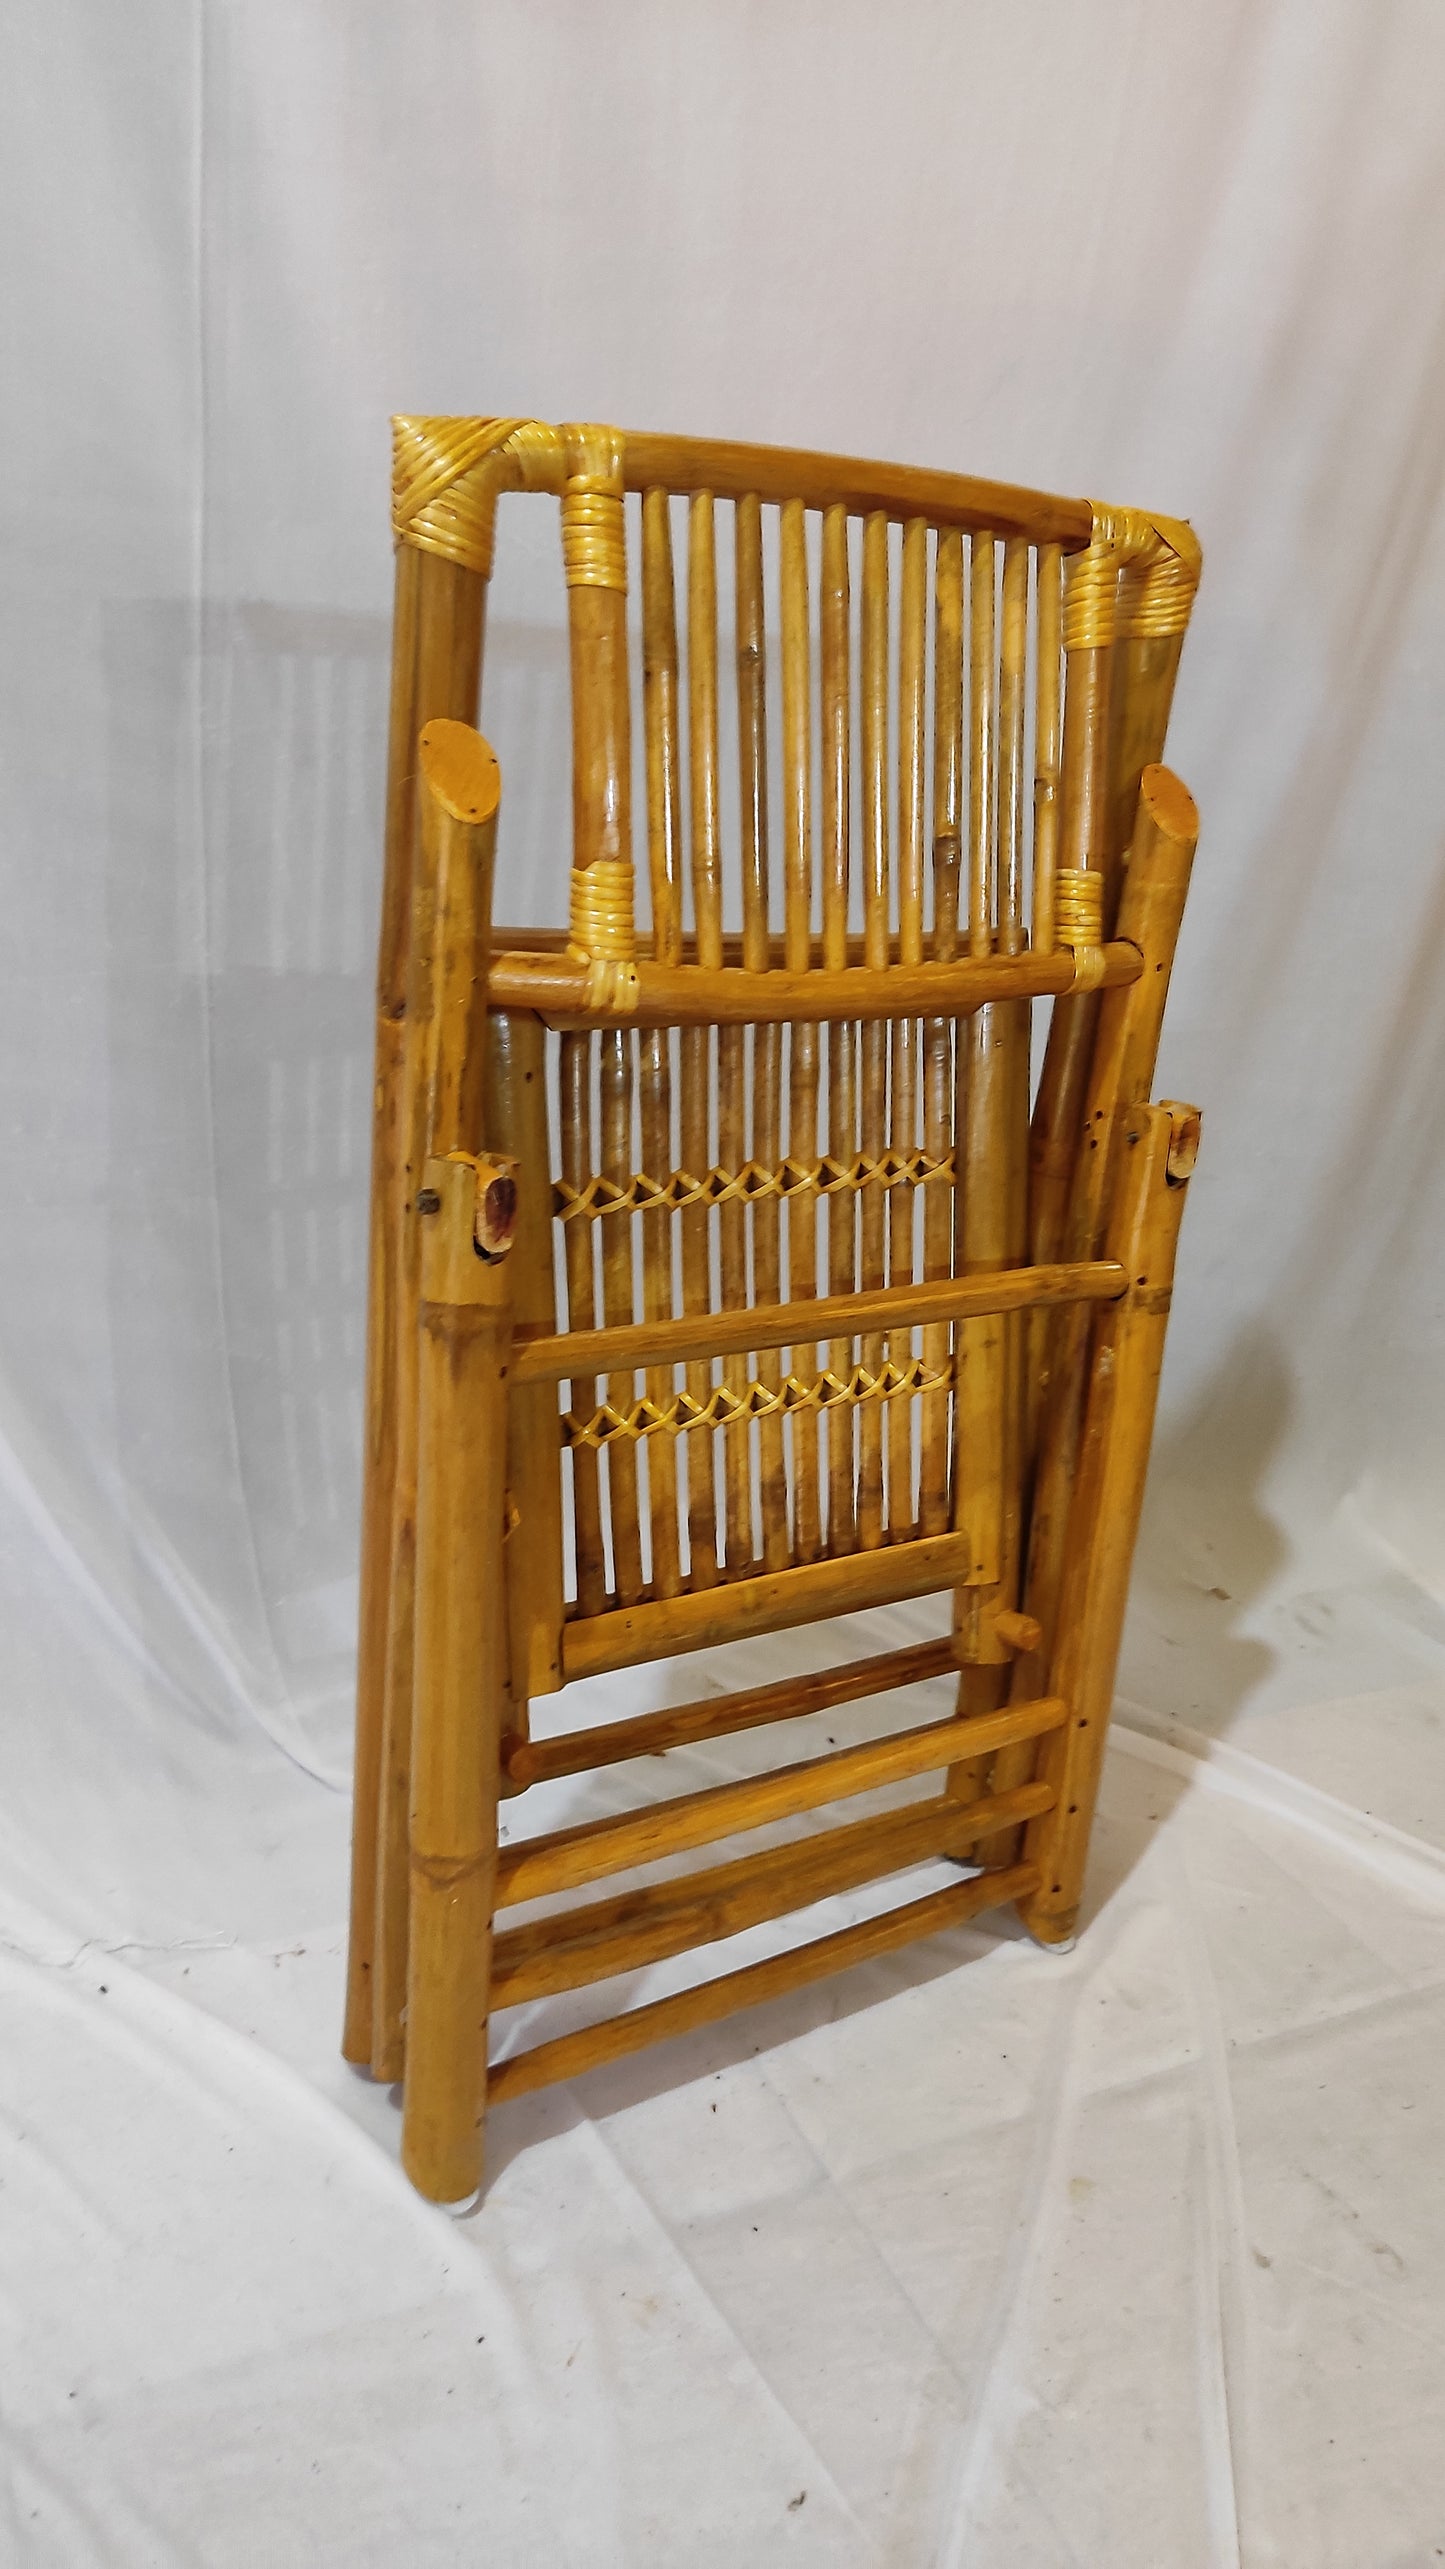 Bamboo Folding chair